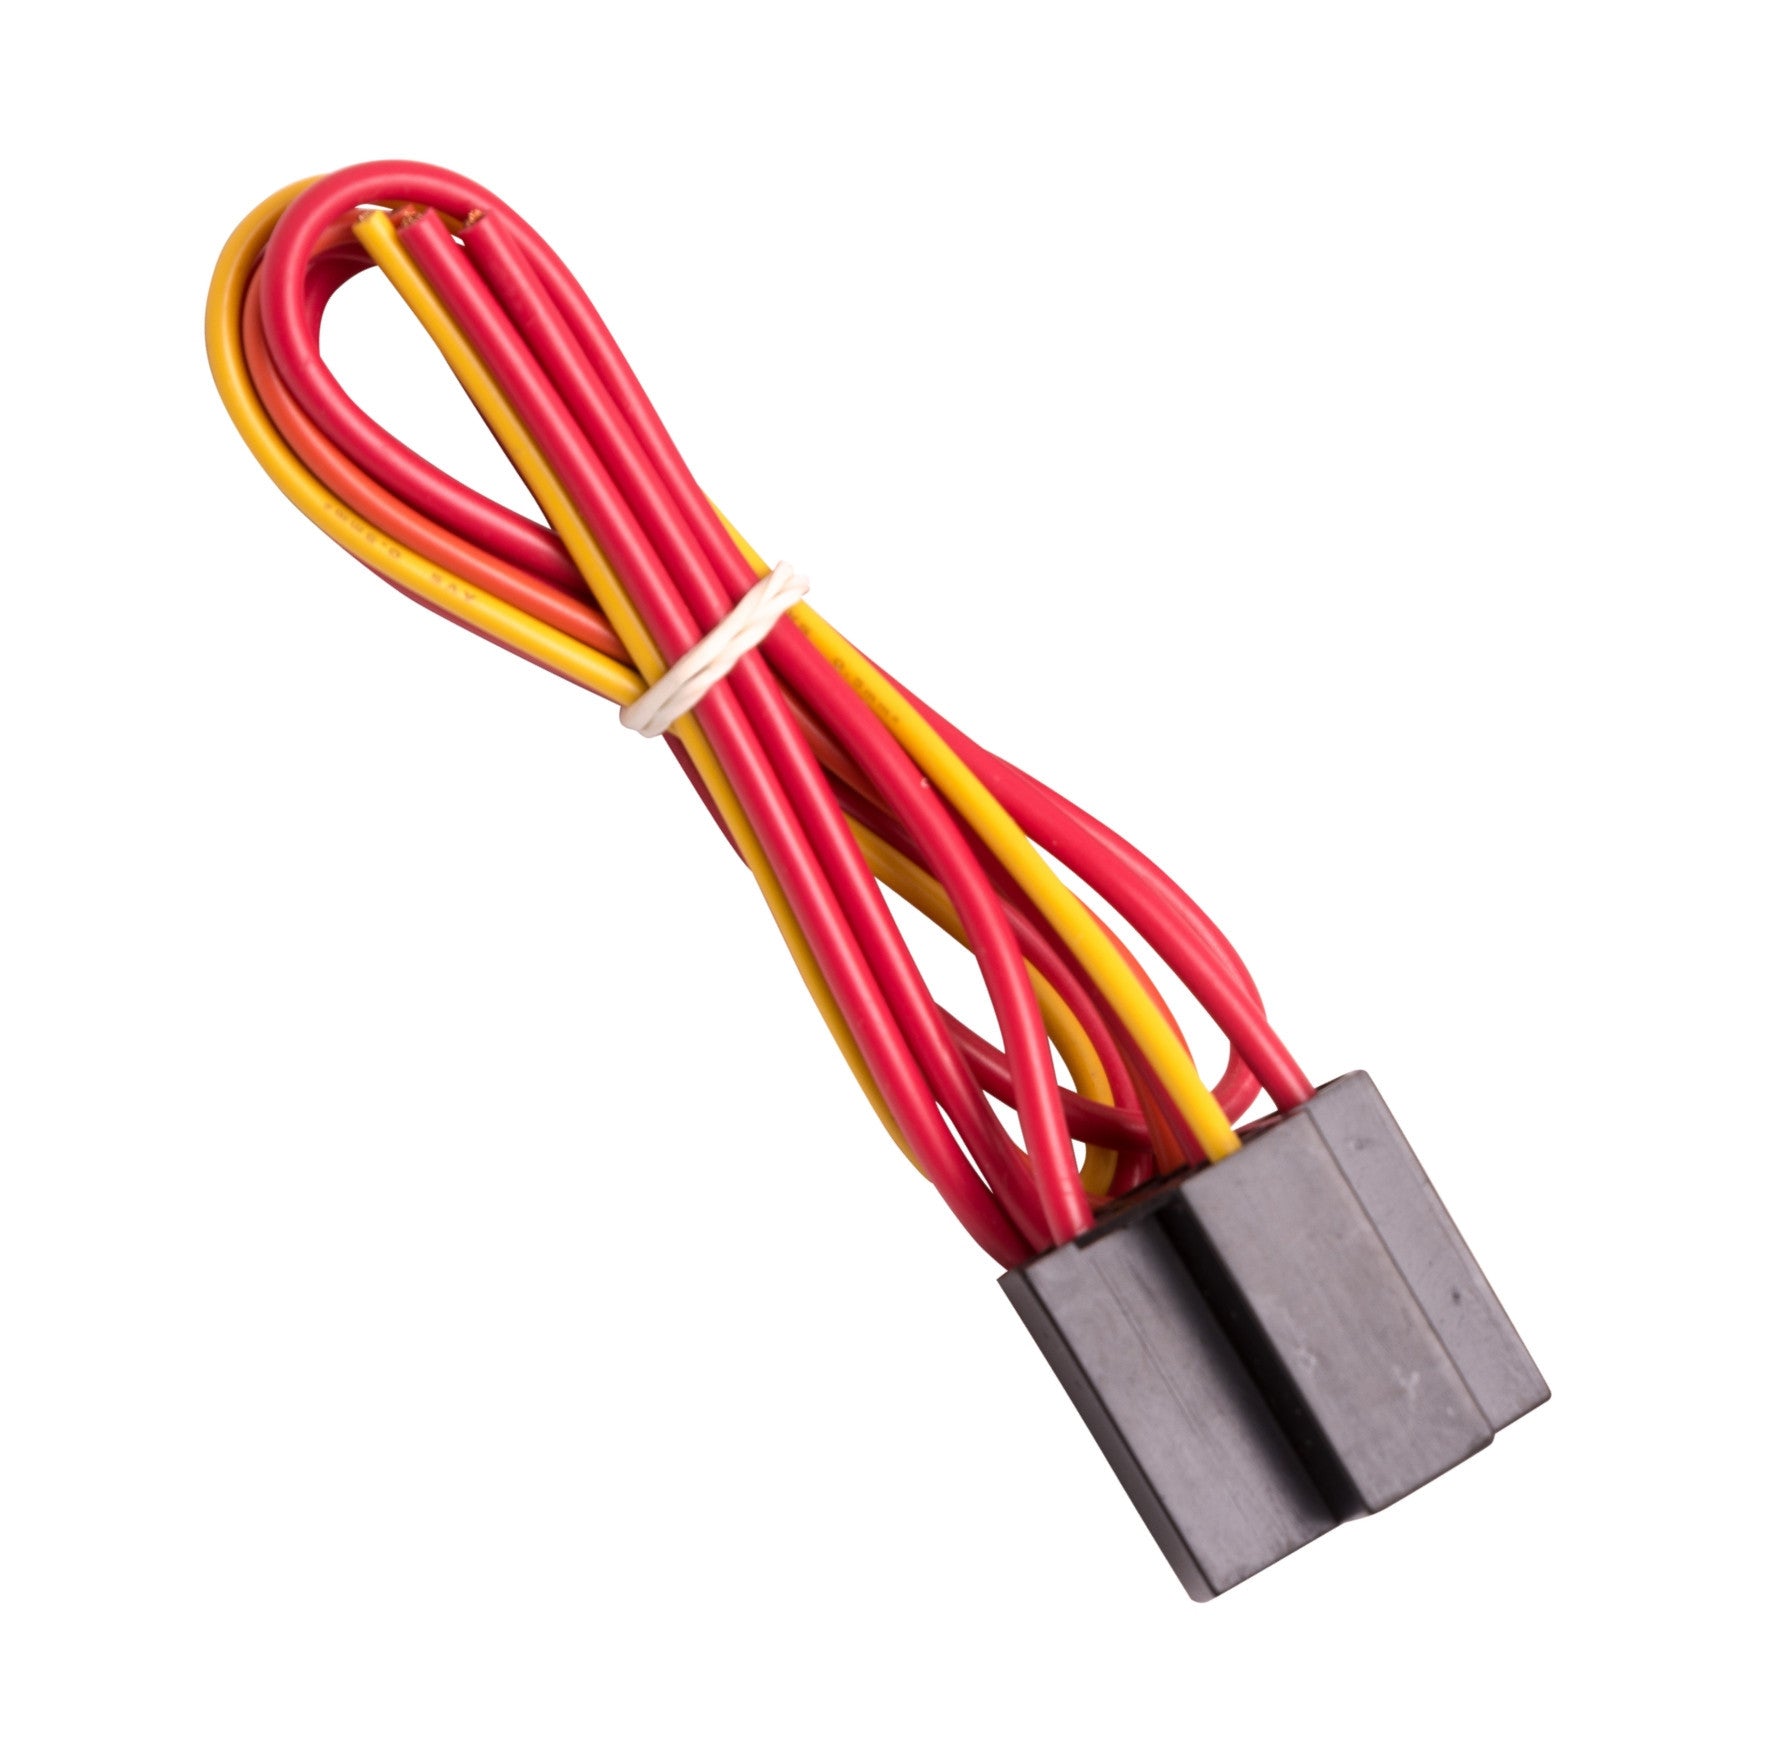 12 Volt enkele aansluiting en kabelboom voor enkelpolig dubbelwerpig relais (SPDT) Product Image